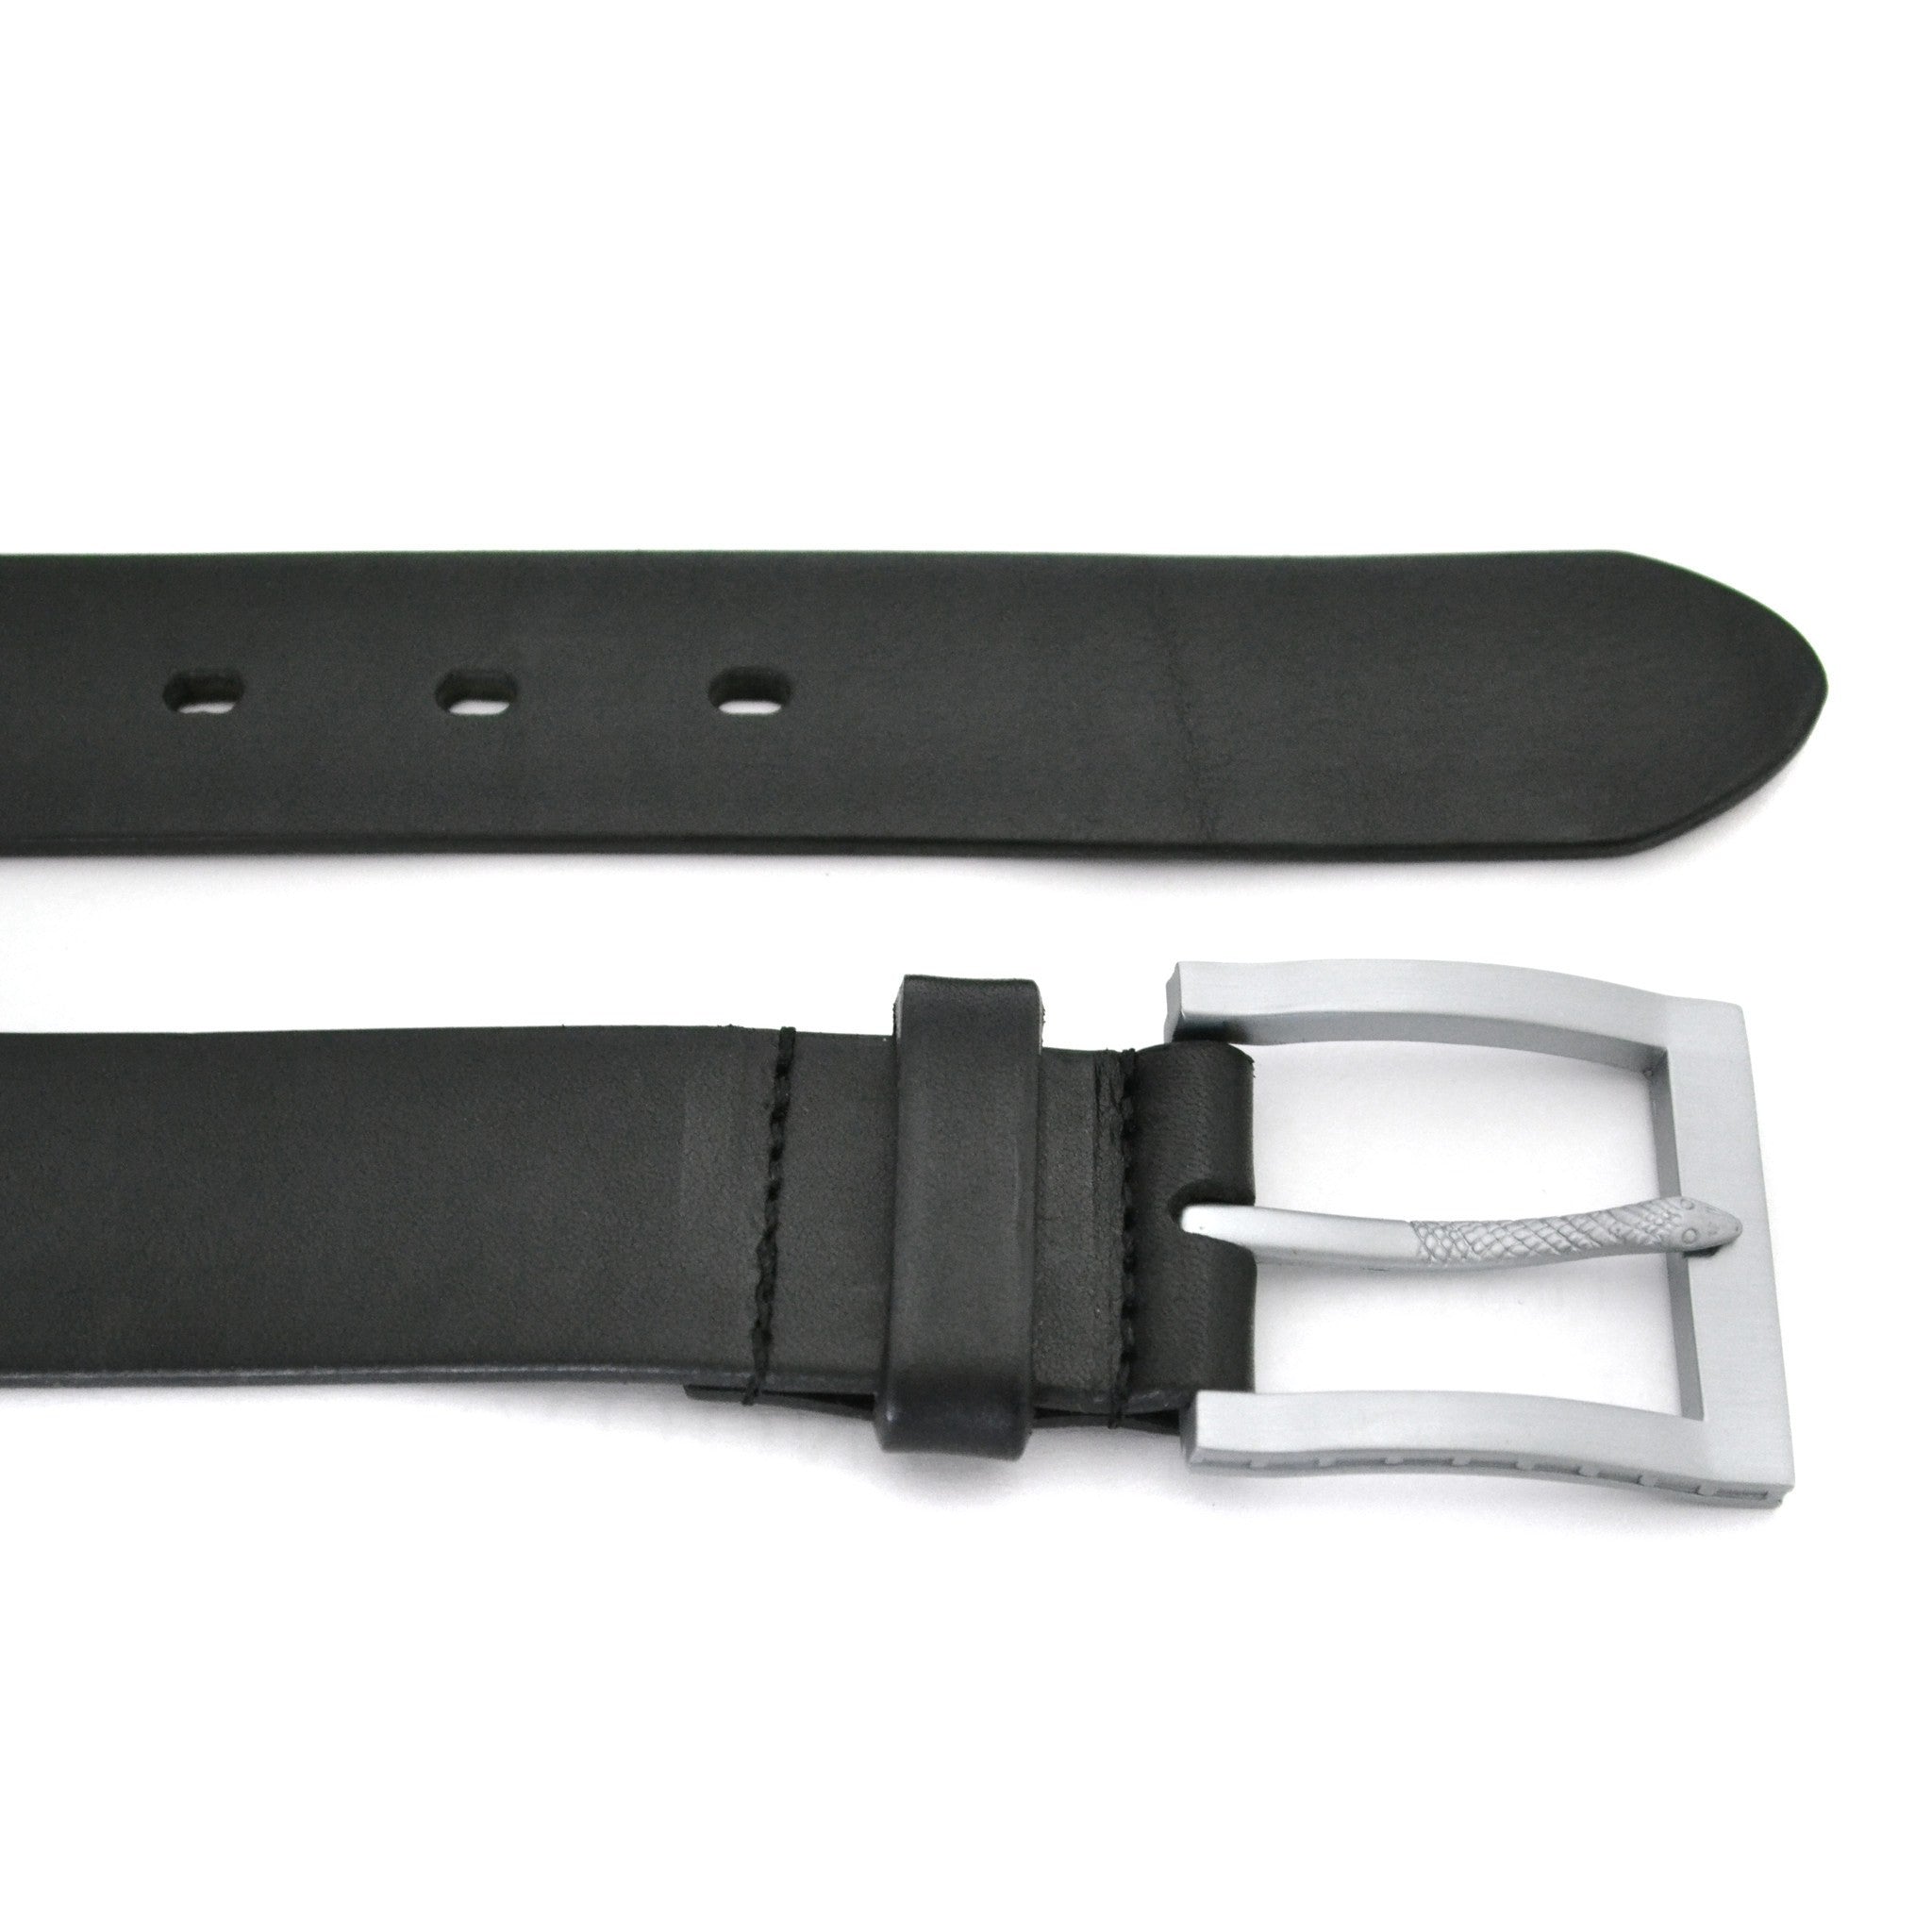 HECTOR - Mens Black Leather Belt  - Belt N Bags